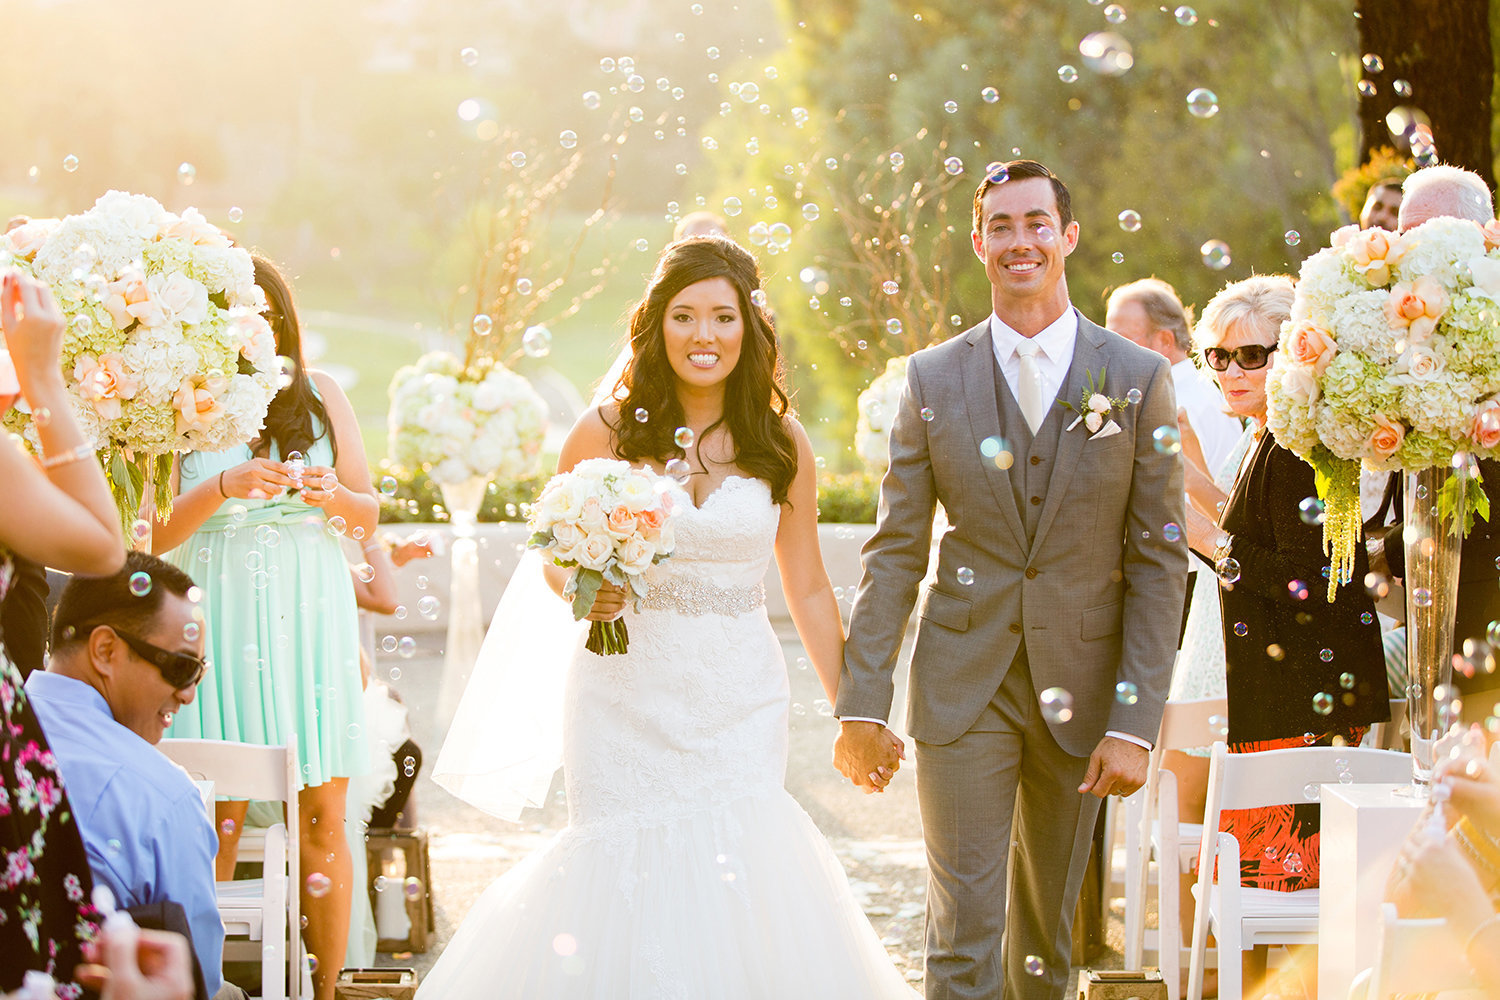 Rancho Bernardo Inn wedding photos ceremony with bubbles blowing